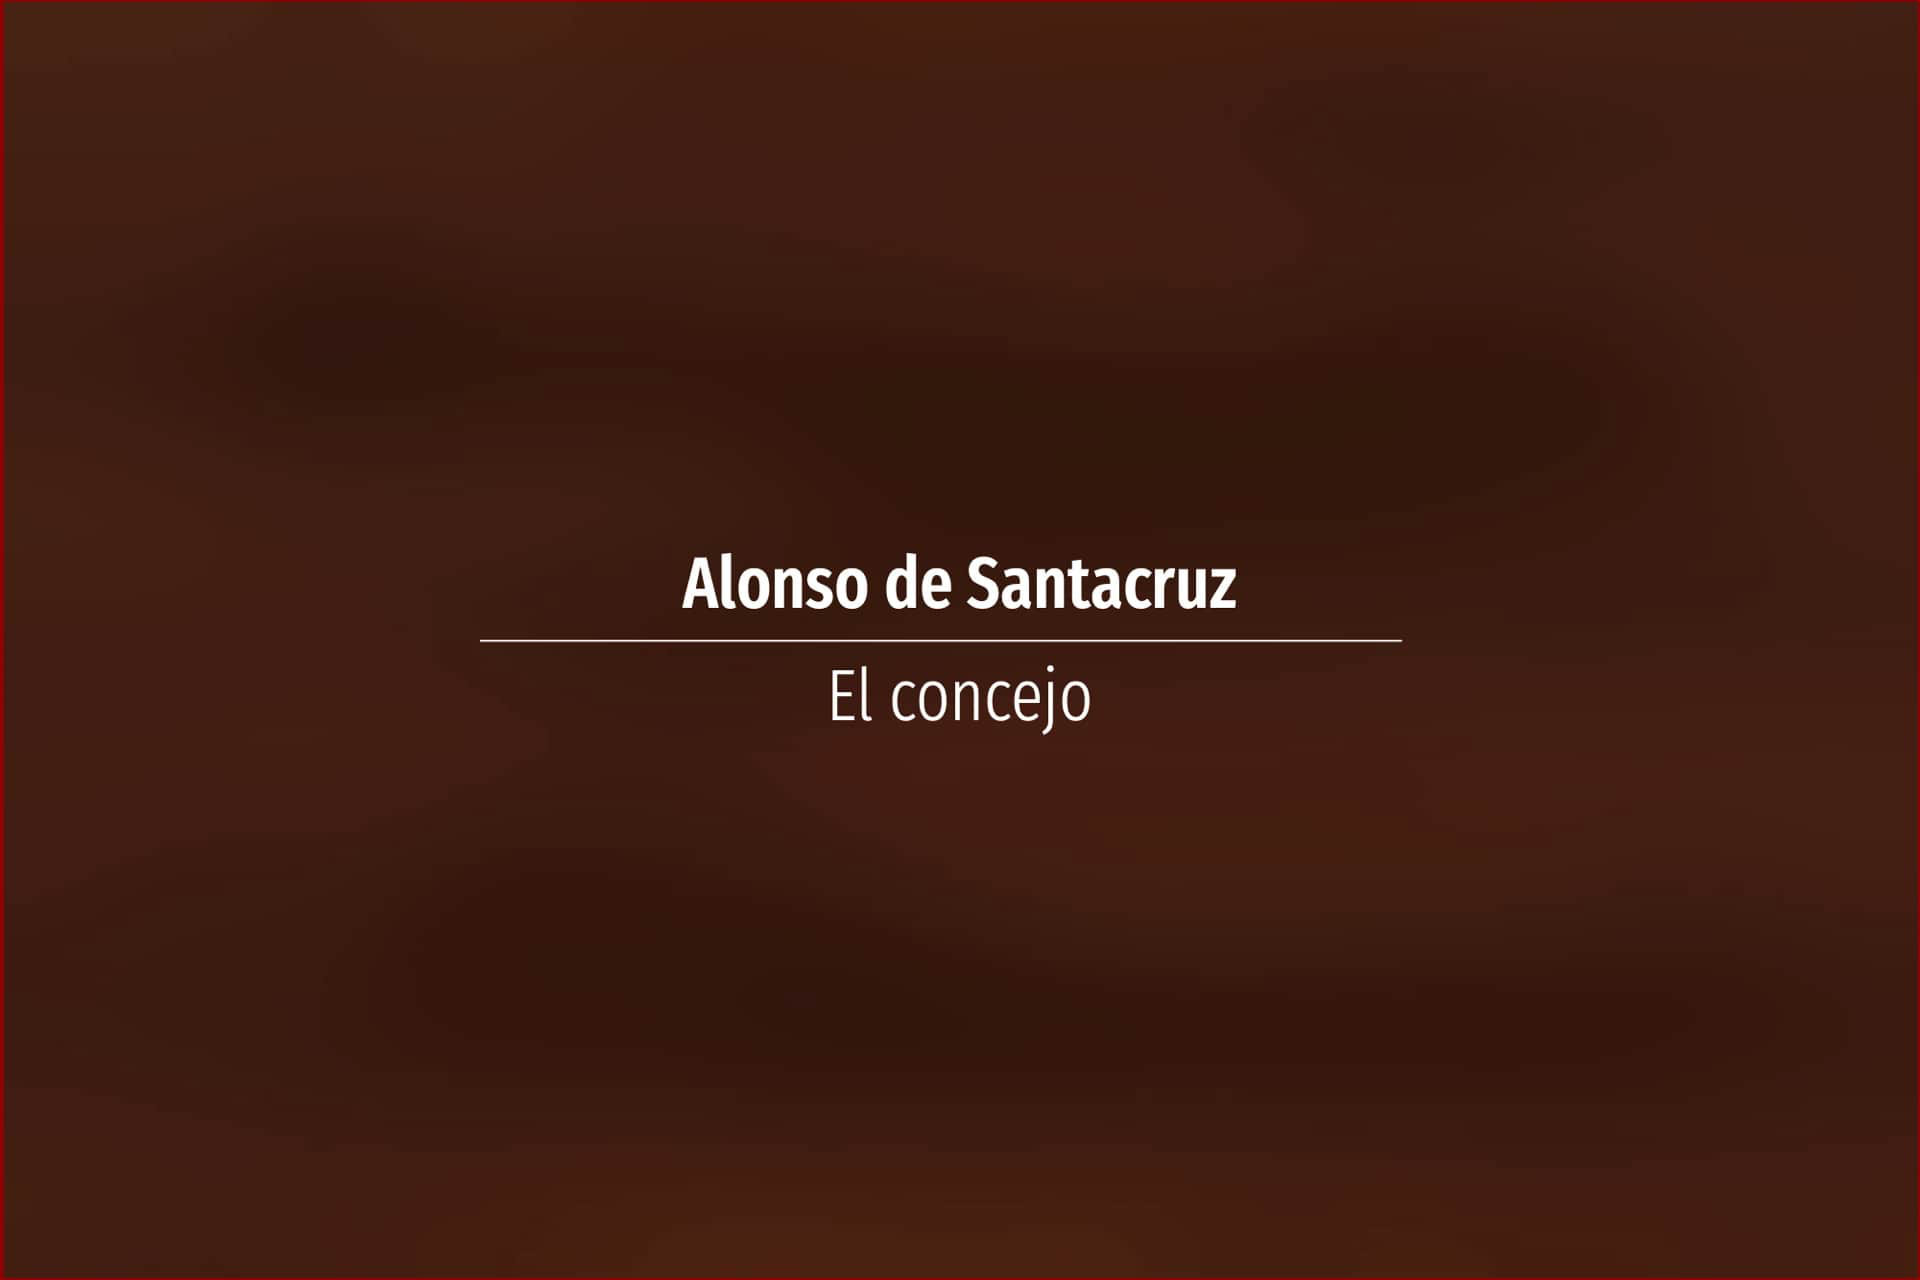 Alonso de Santacruz